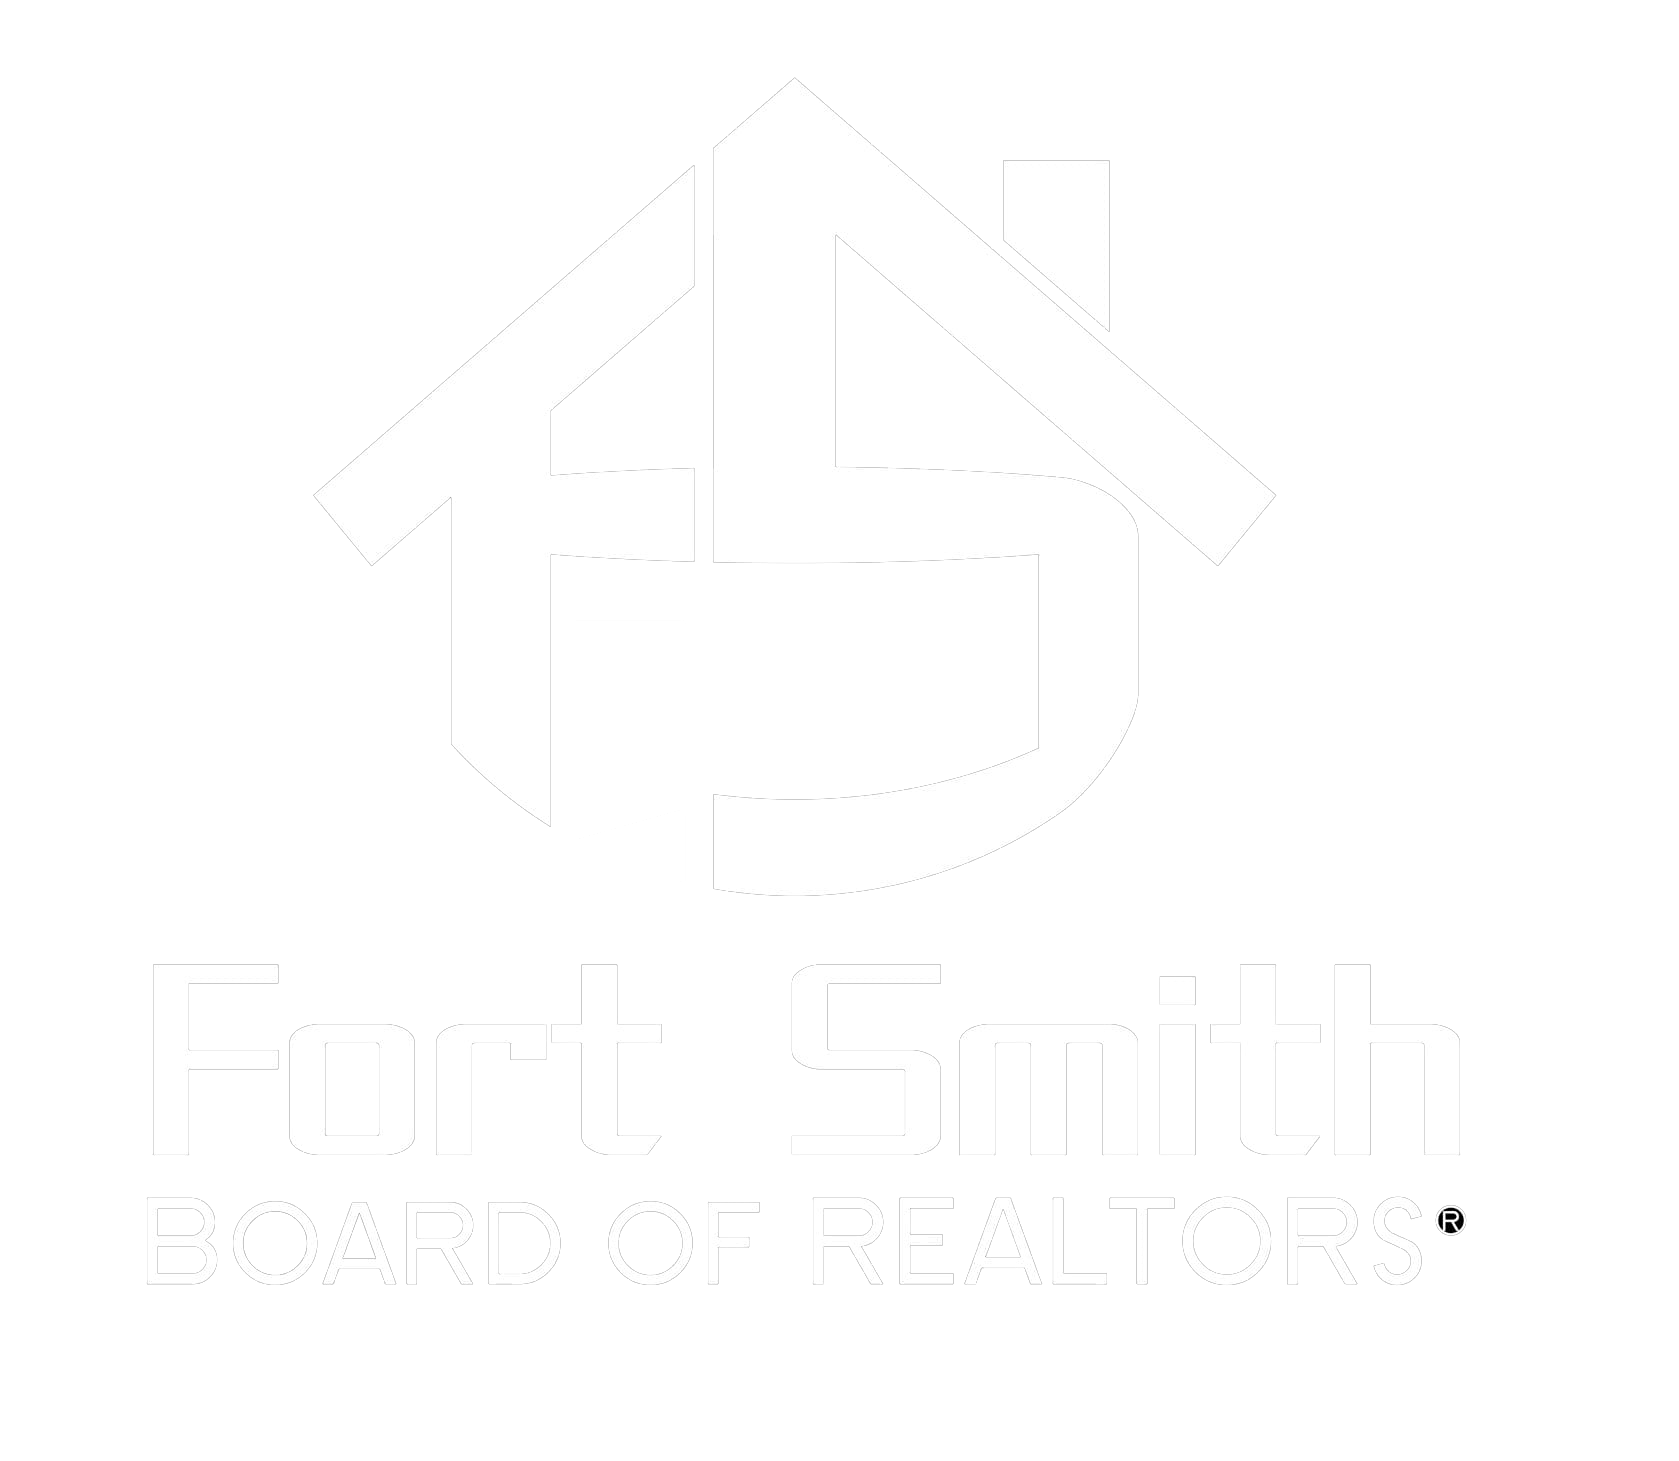 Fort Smith Board of Realtors logo